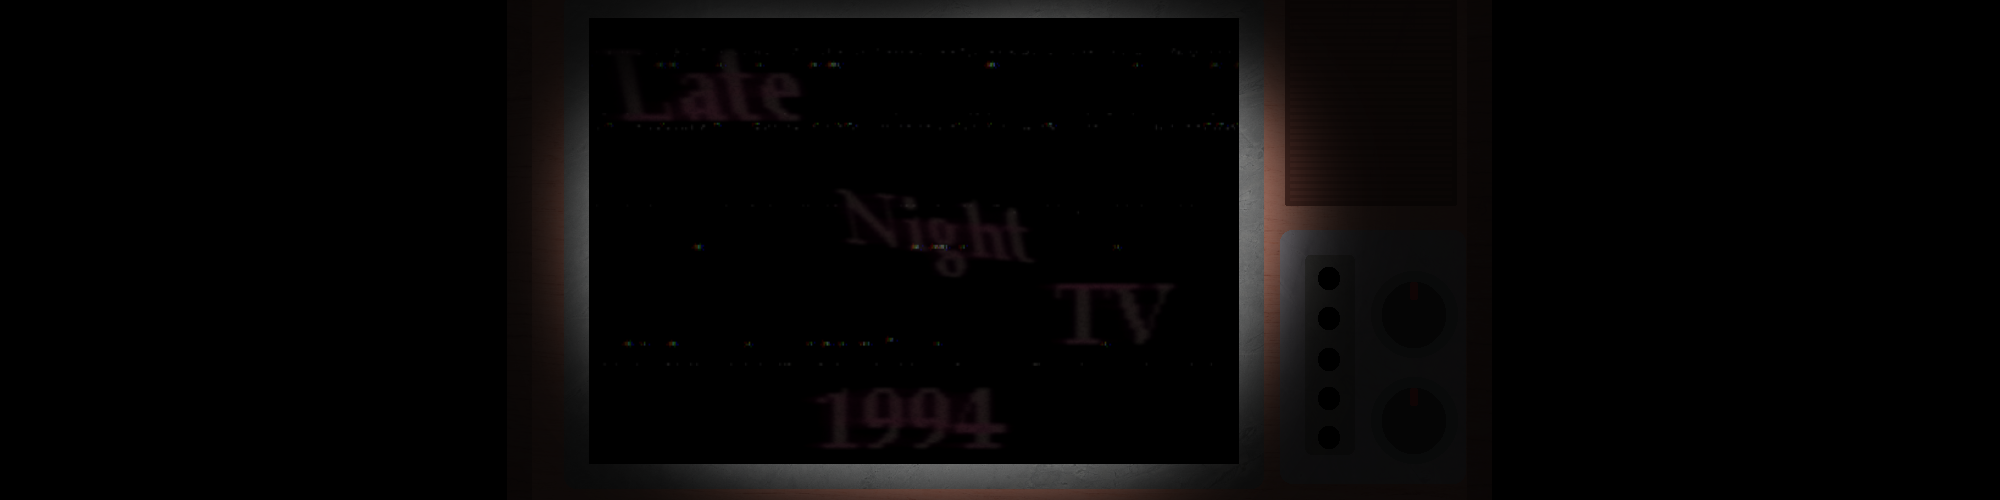 Late Night TV (1994)